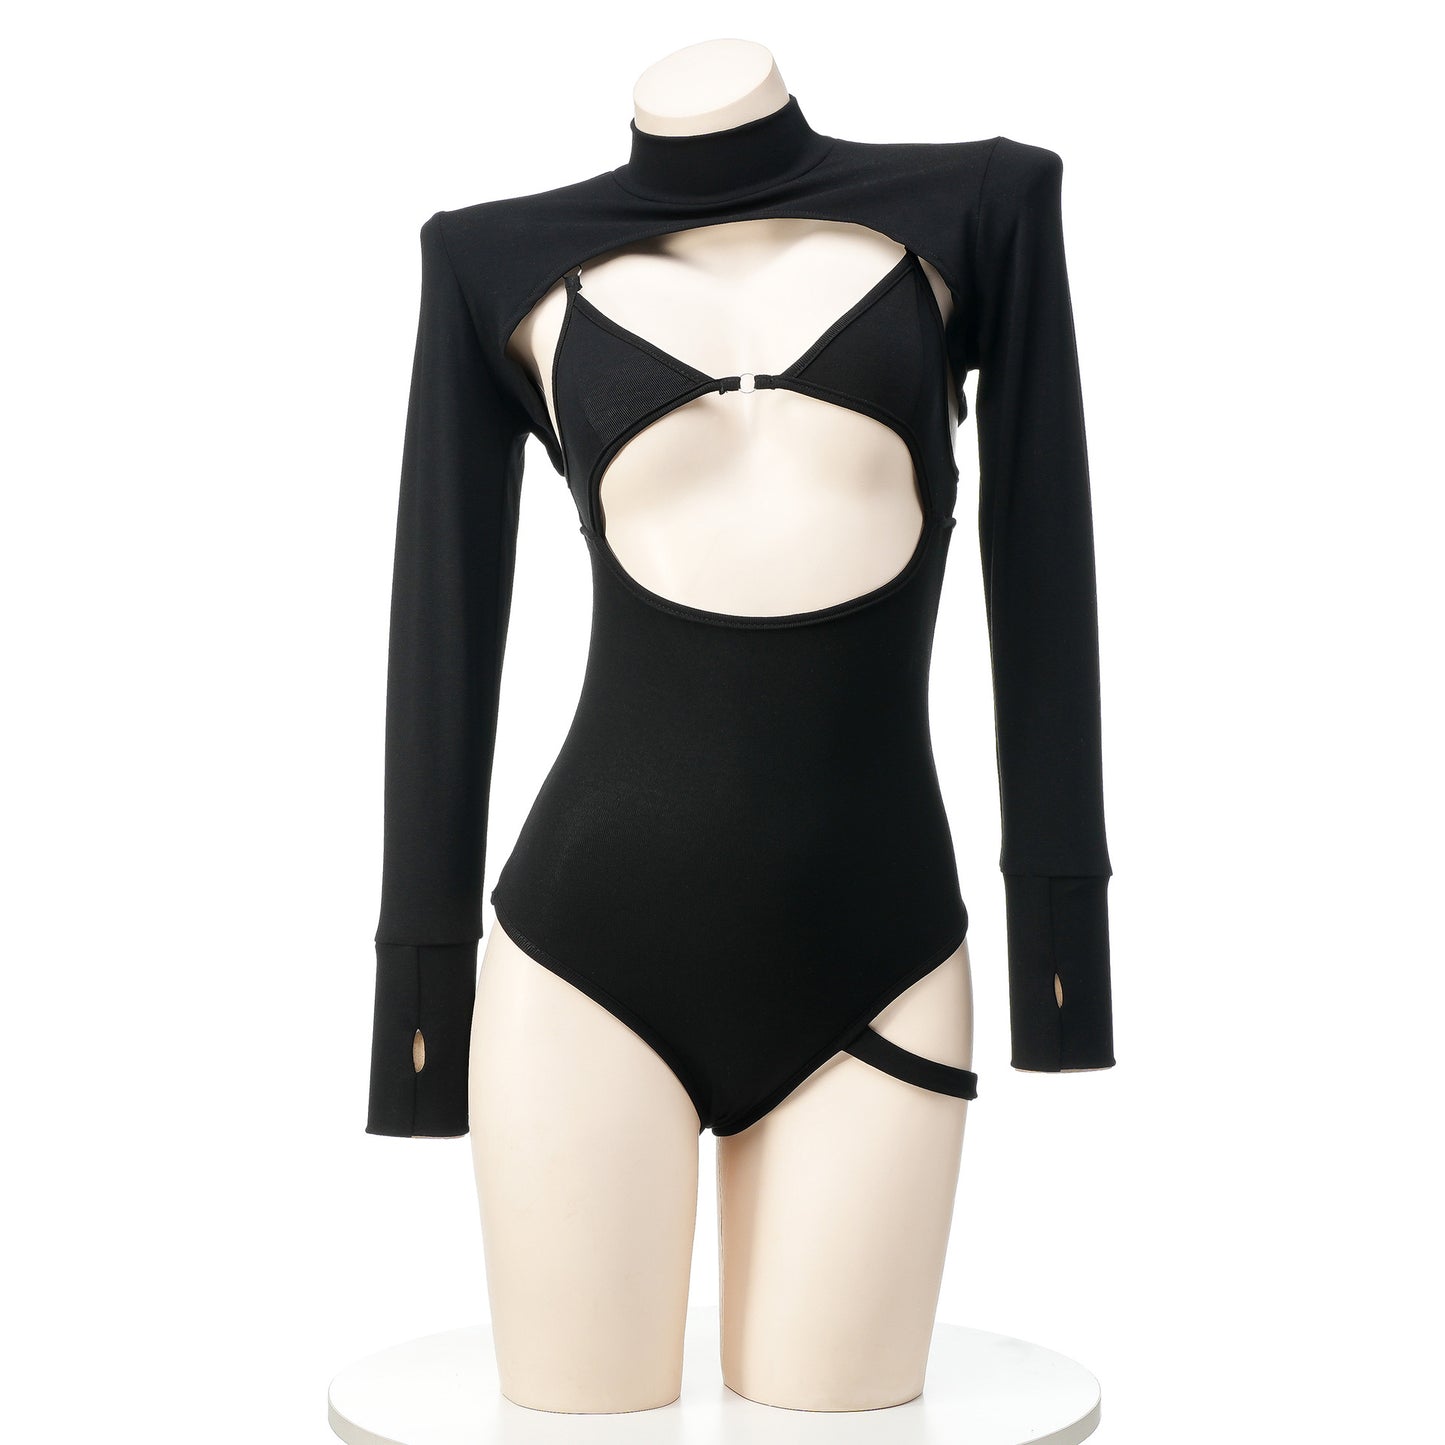 Sexy Black Bodysuit Lingerie for Femboy - Femboy Fashion